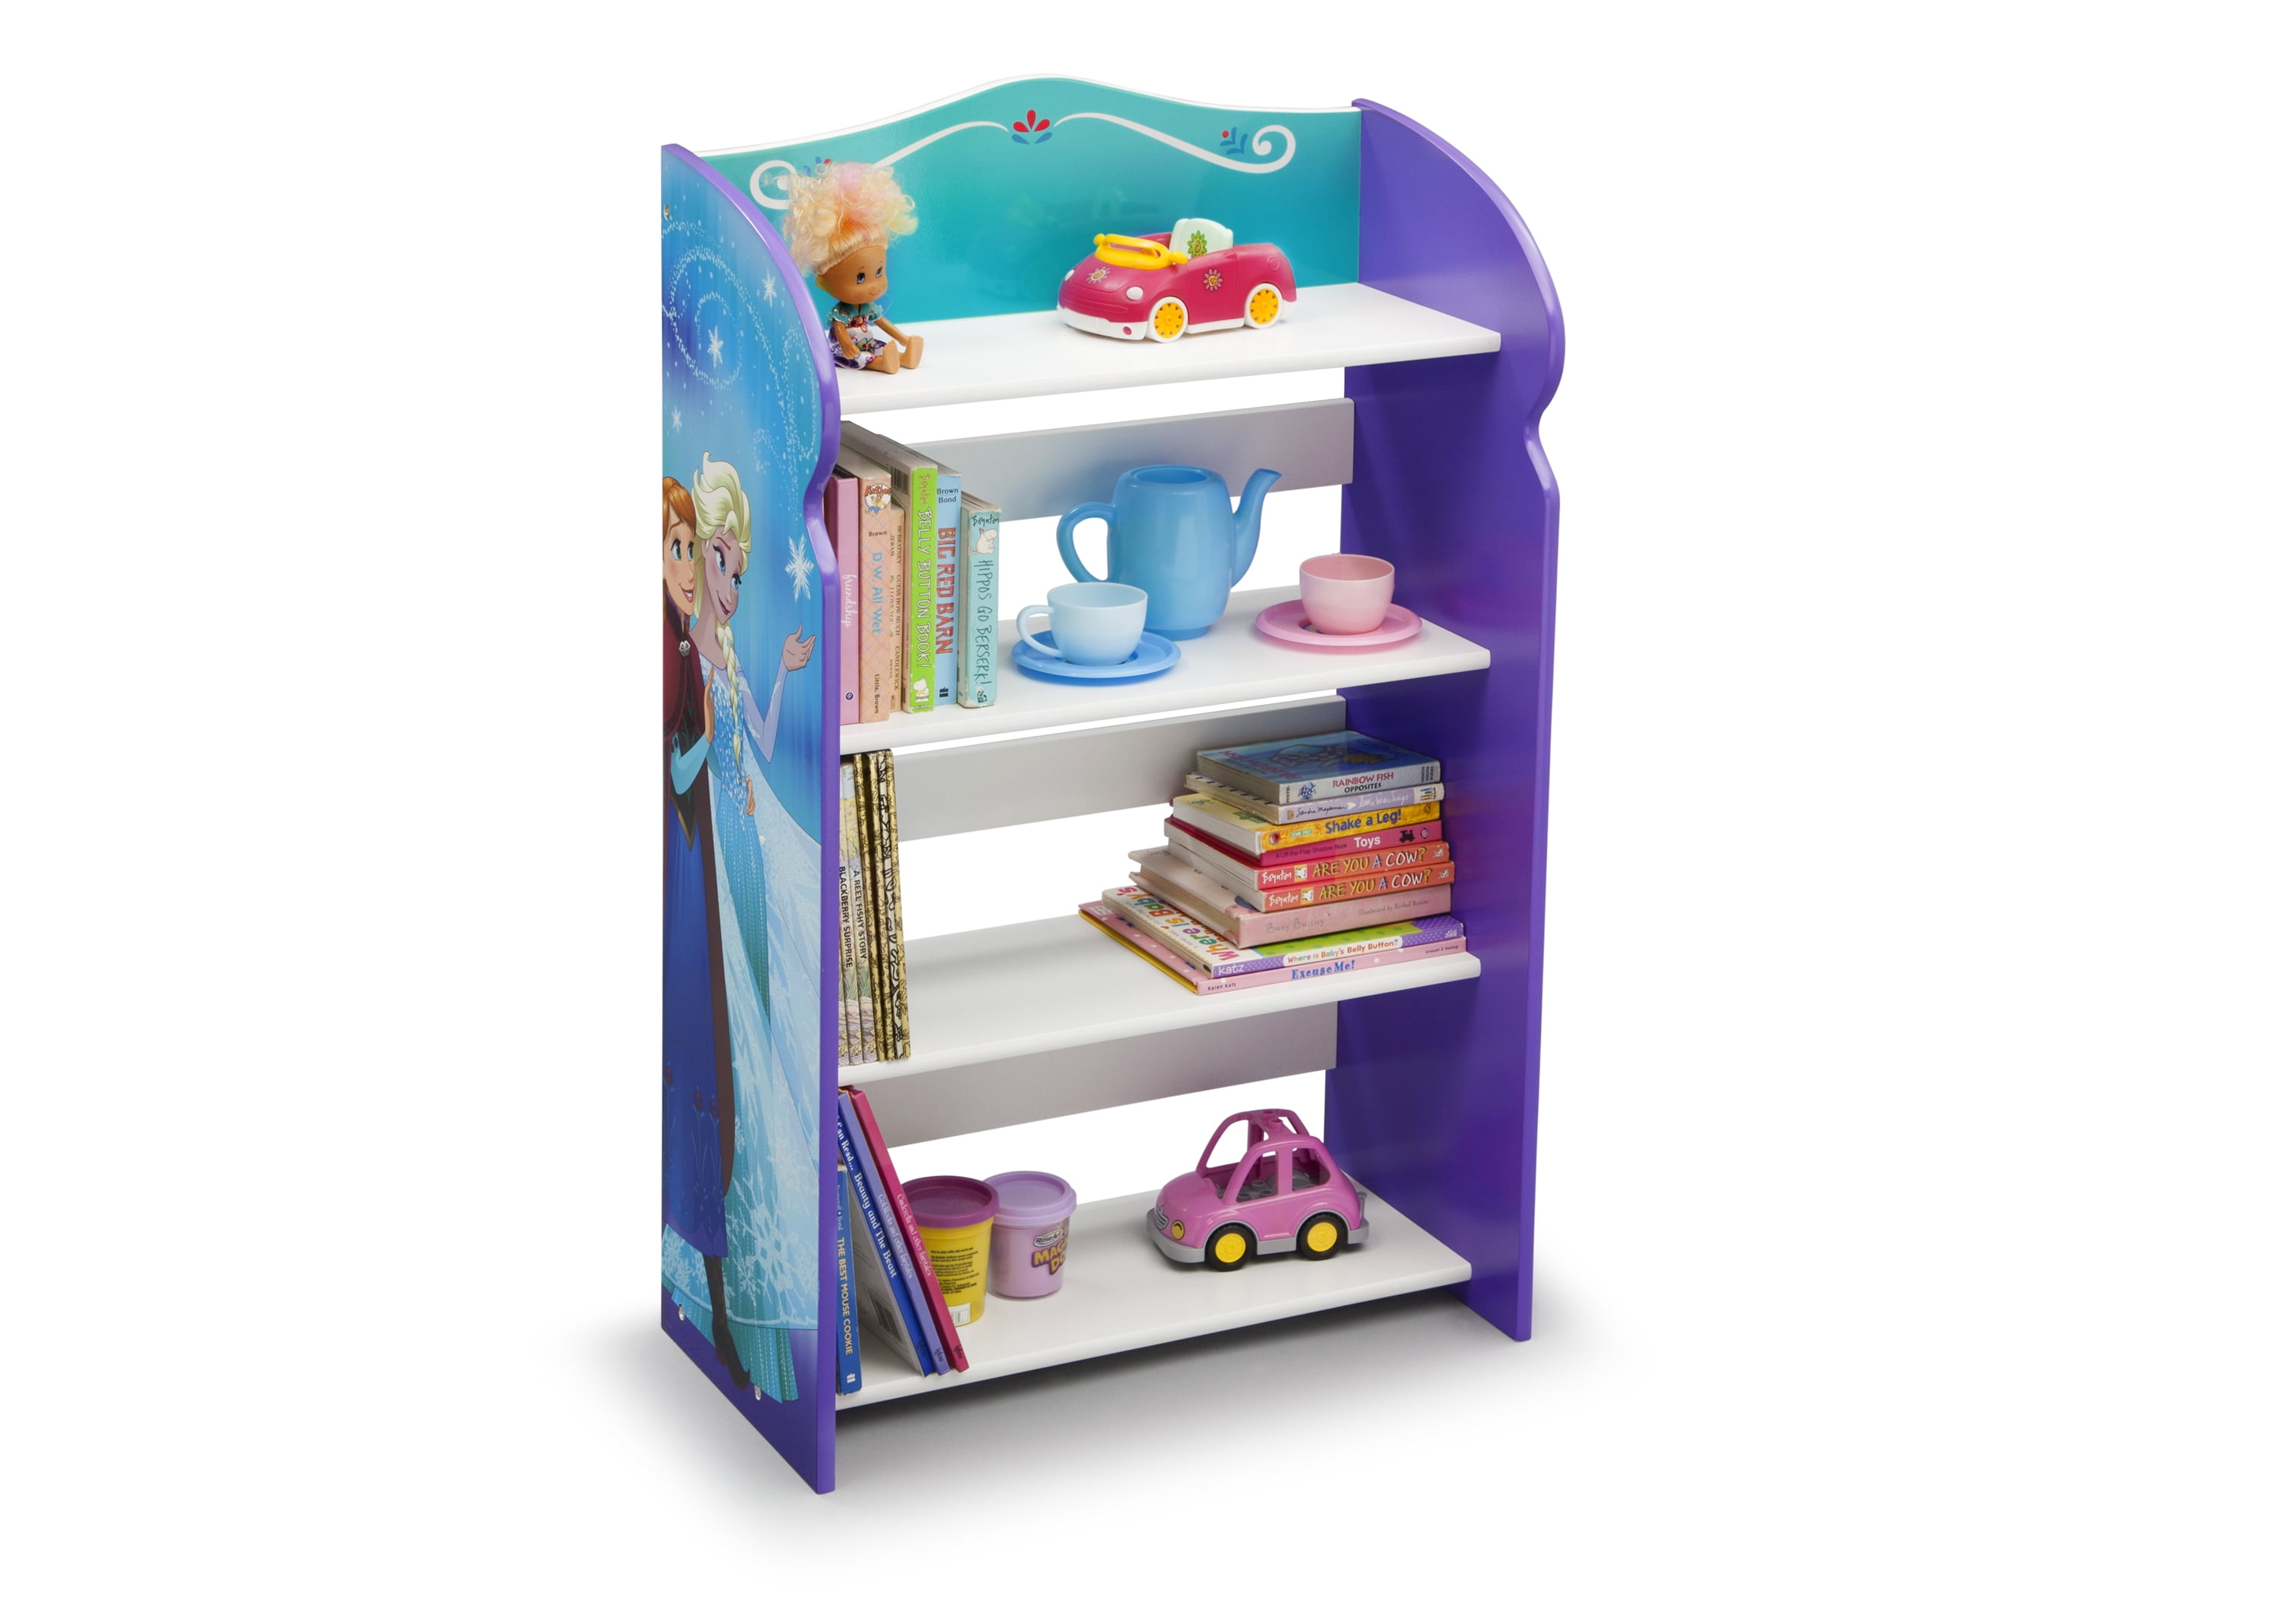 Disney Frozen Wood Bookshelf By Delta Children Walmart Com